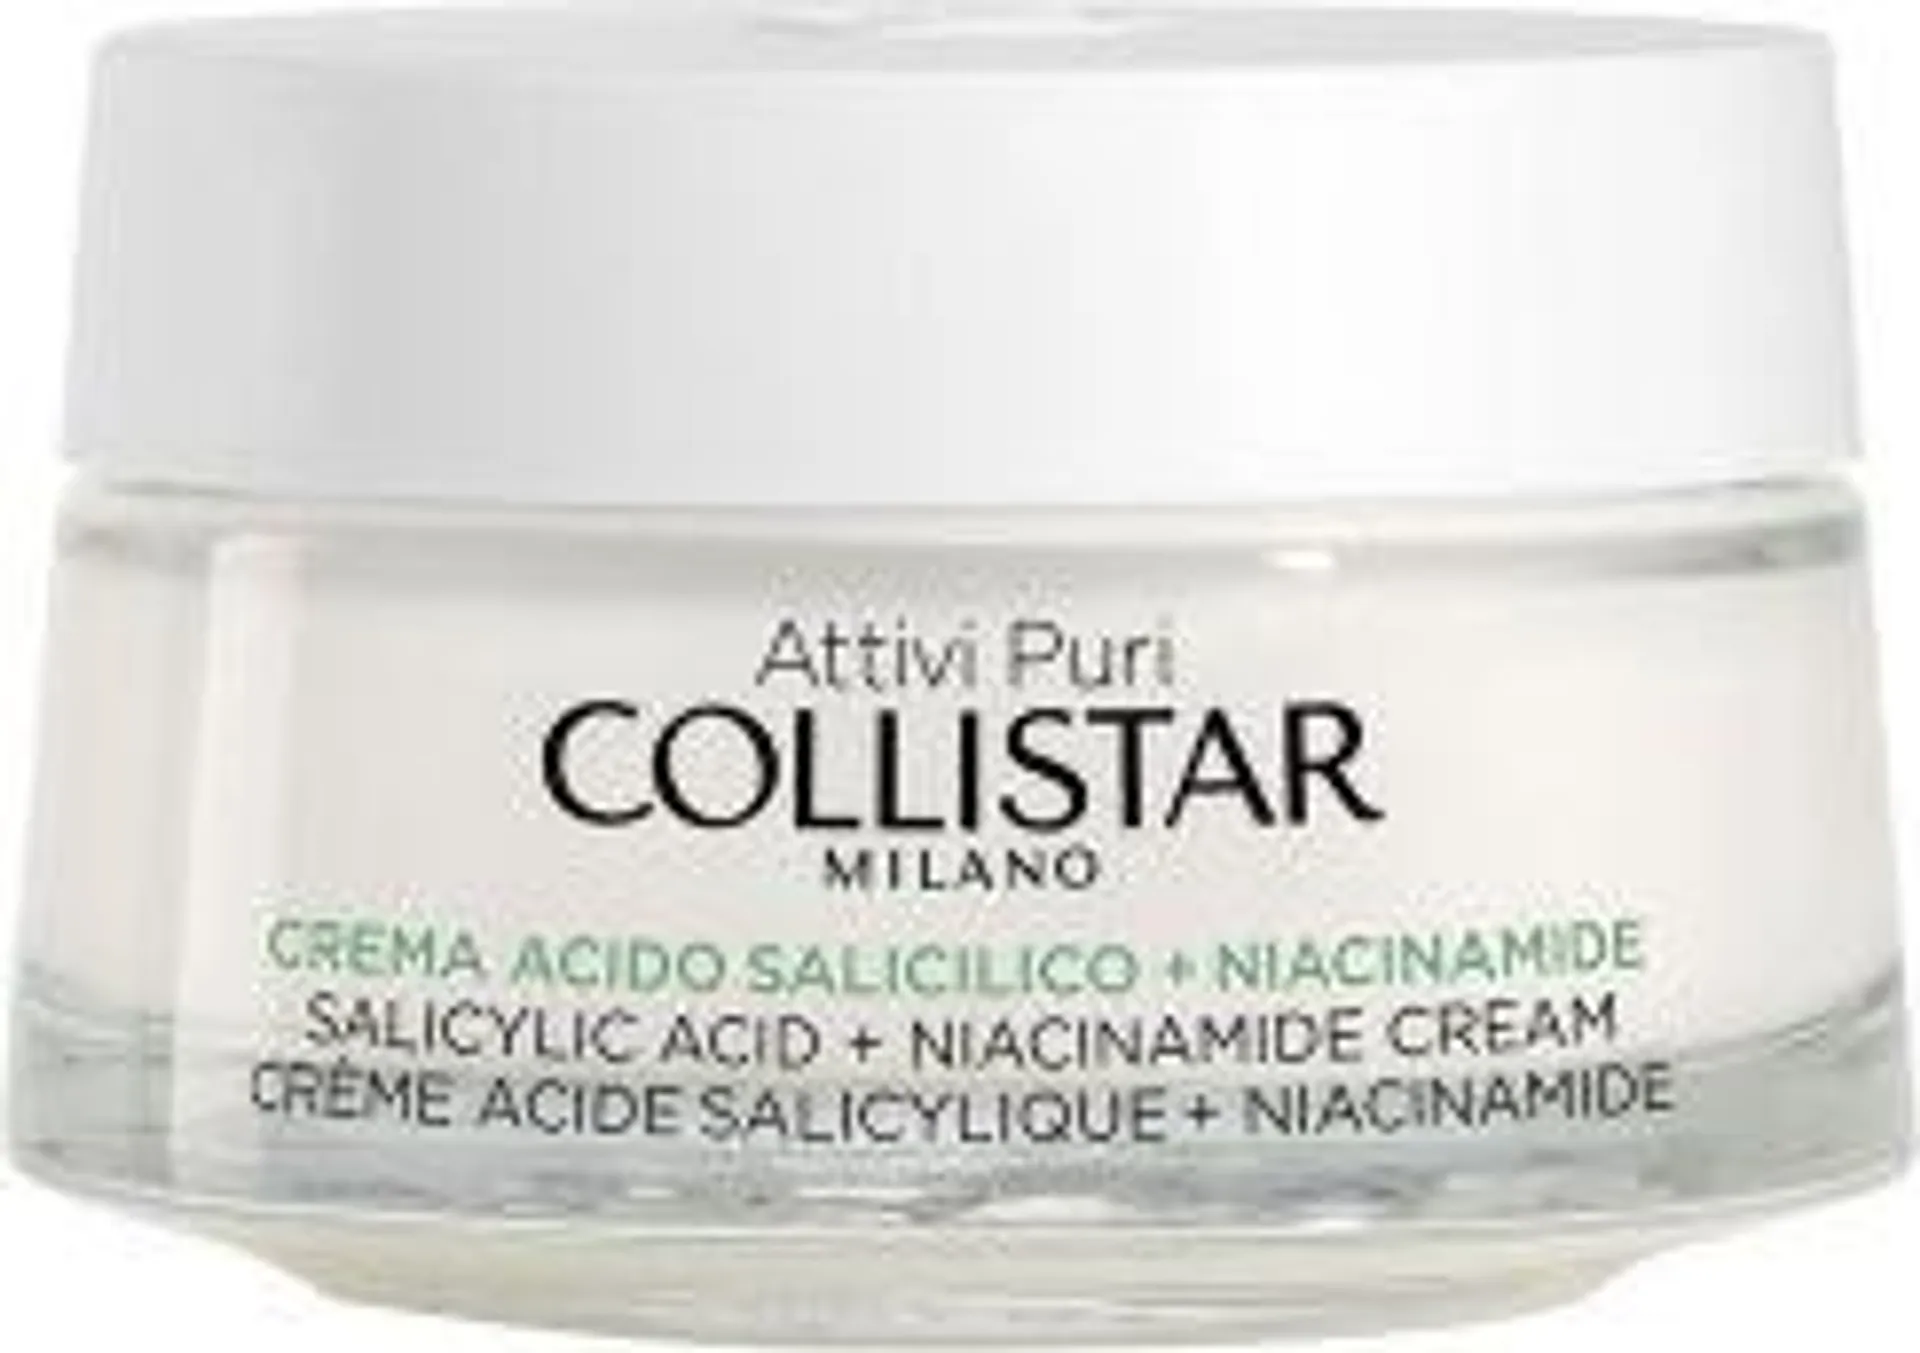 Collistar Attivi Puri Salicylic Acid + Niacinamide Cream Krem 50 ml